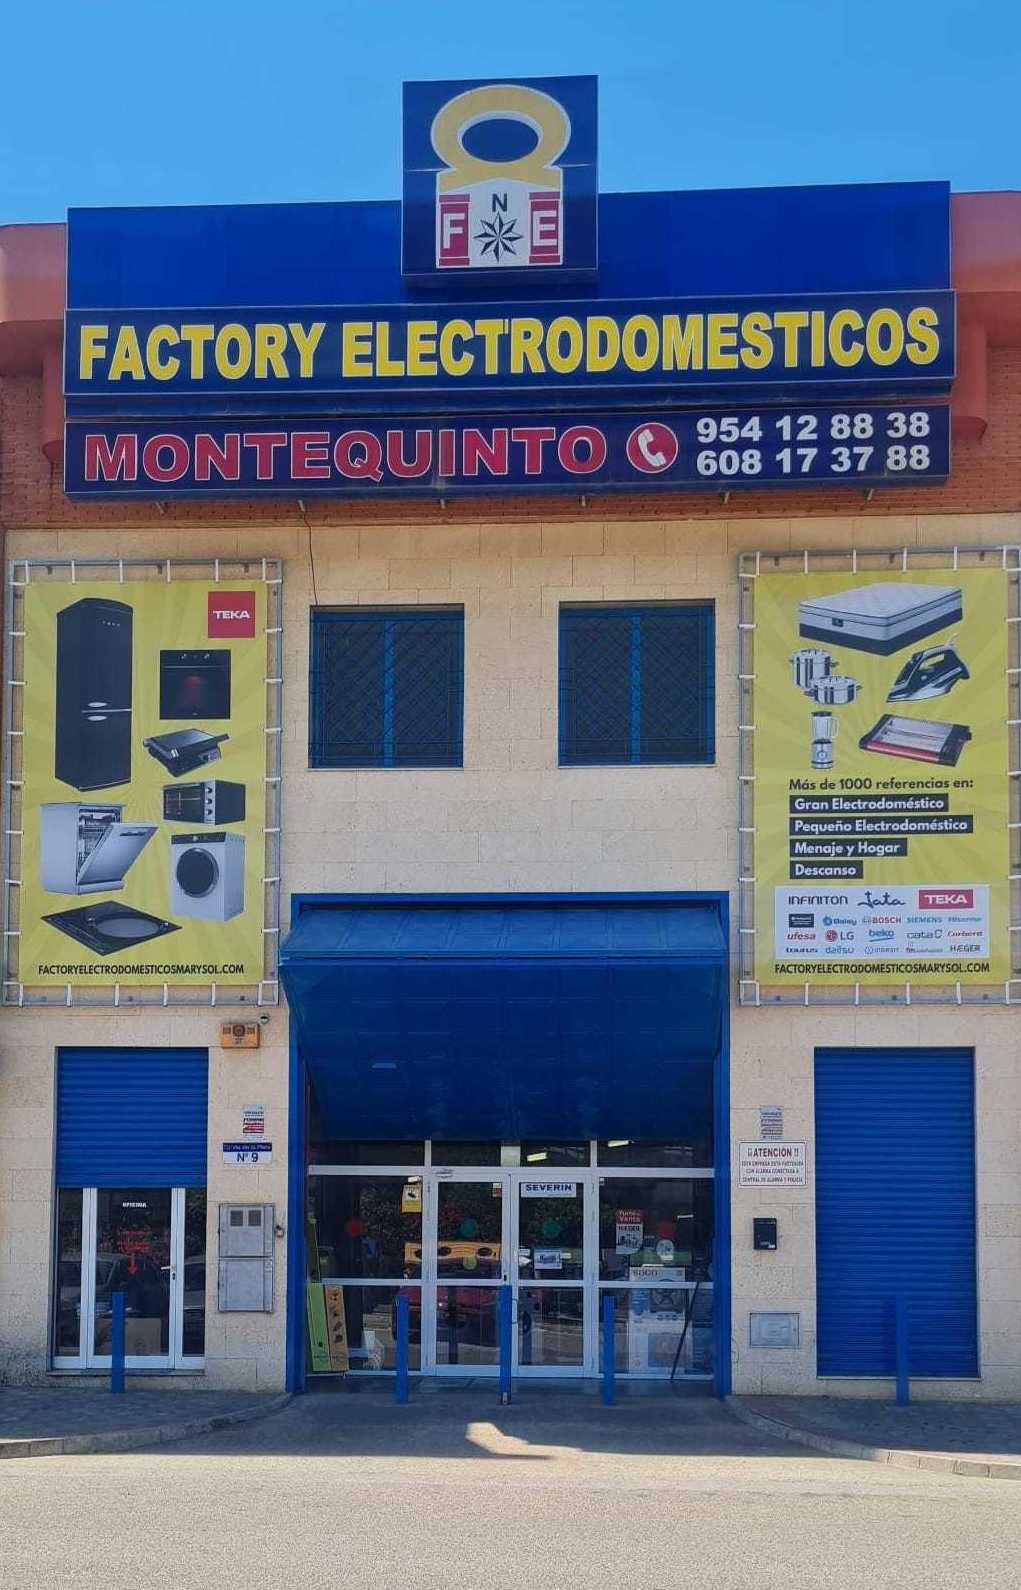 FACTORY ELECTRODOMESTICOS MONTEQUINTO